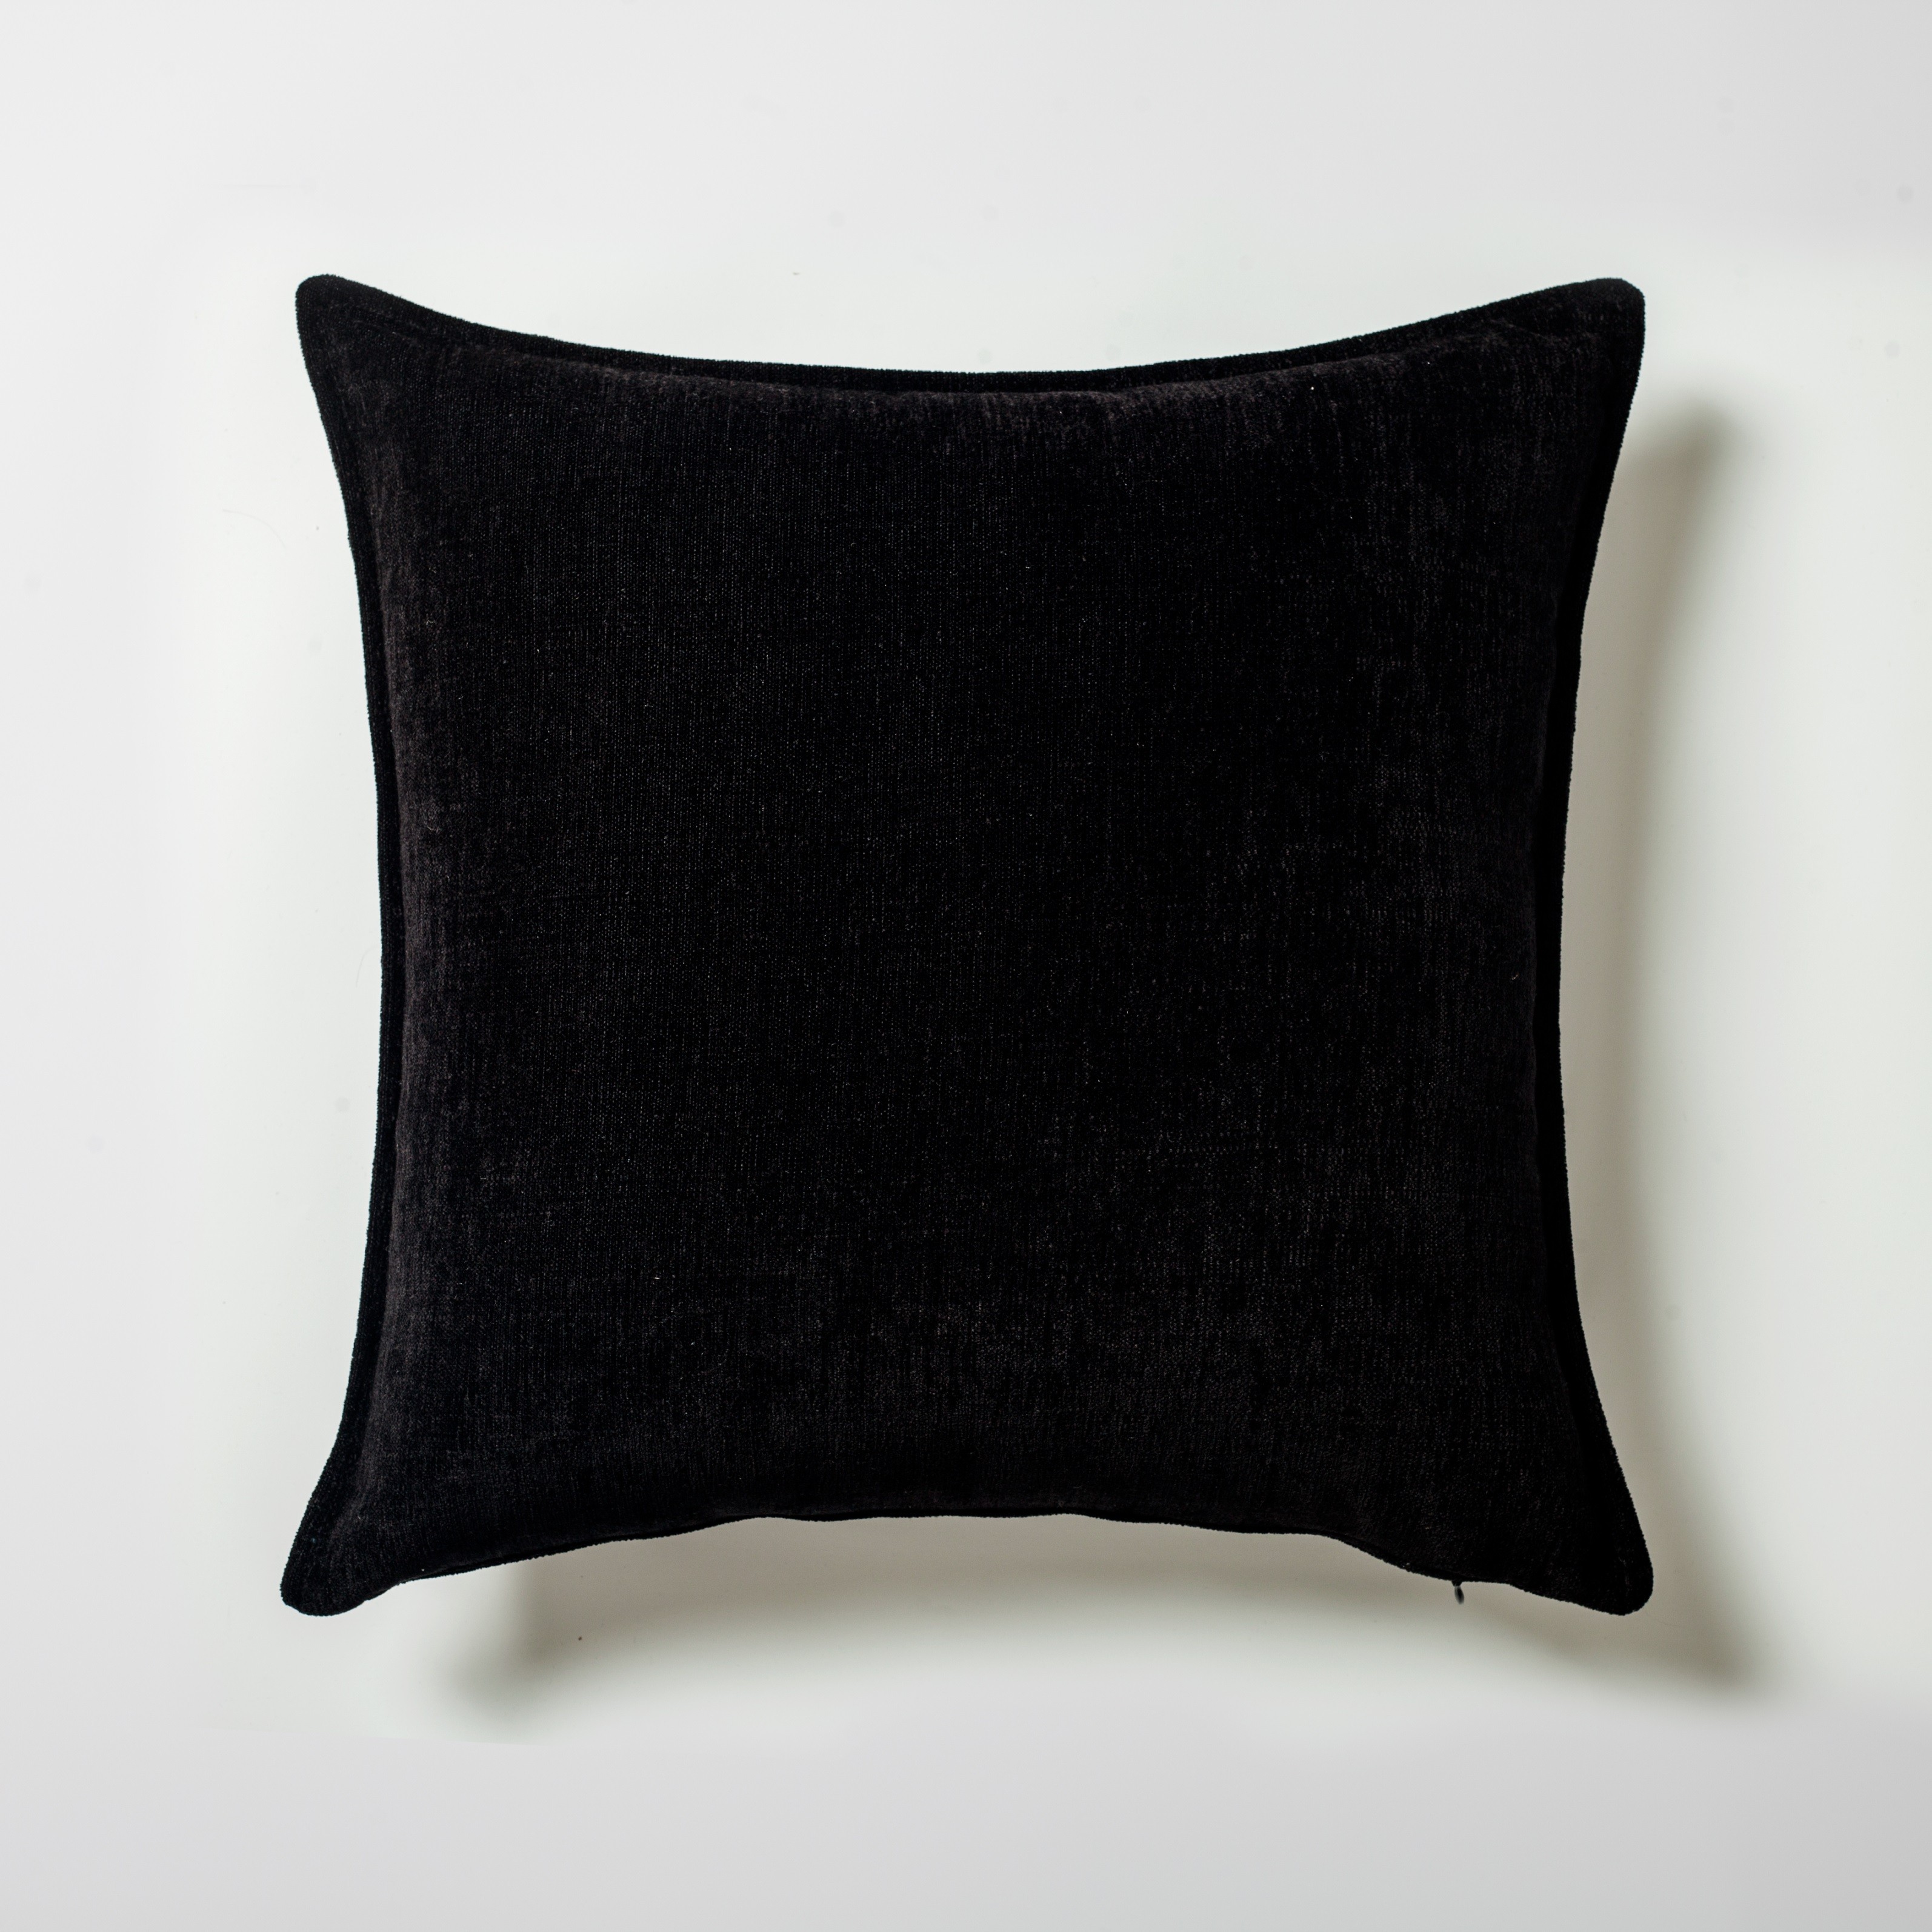 "Alina" - Black Velvet Textured Chenille Cushion 20x20 Inch - Black (Cover Only)